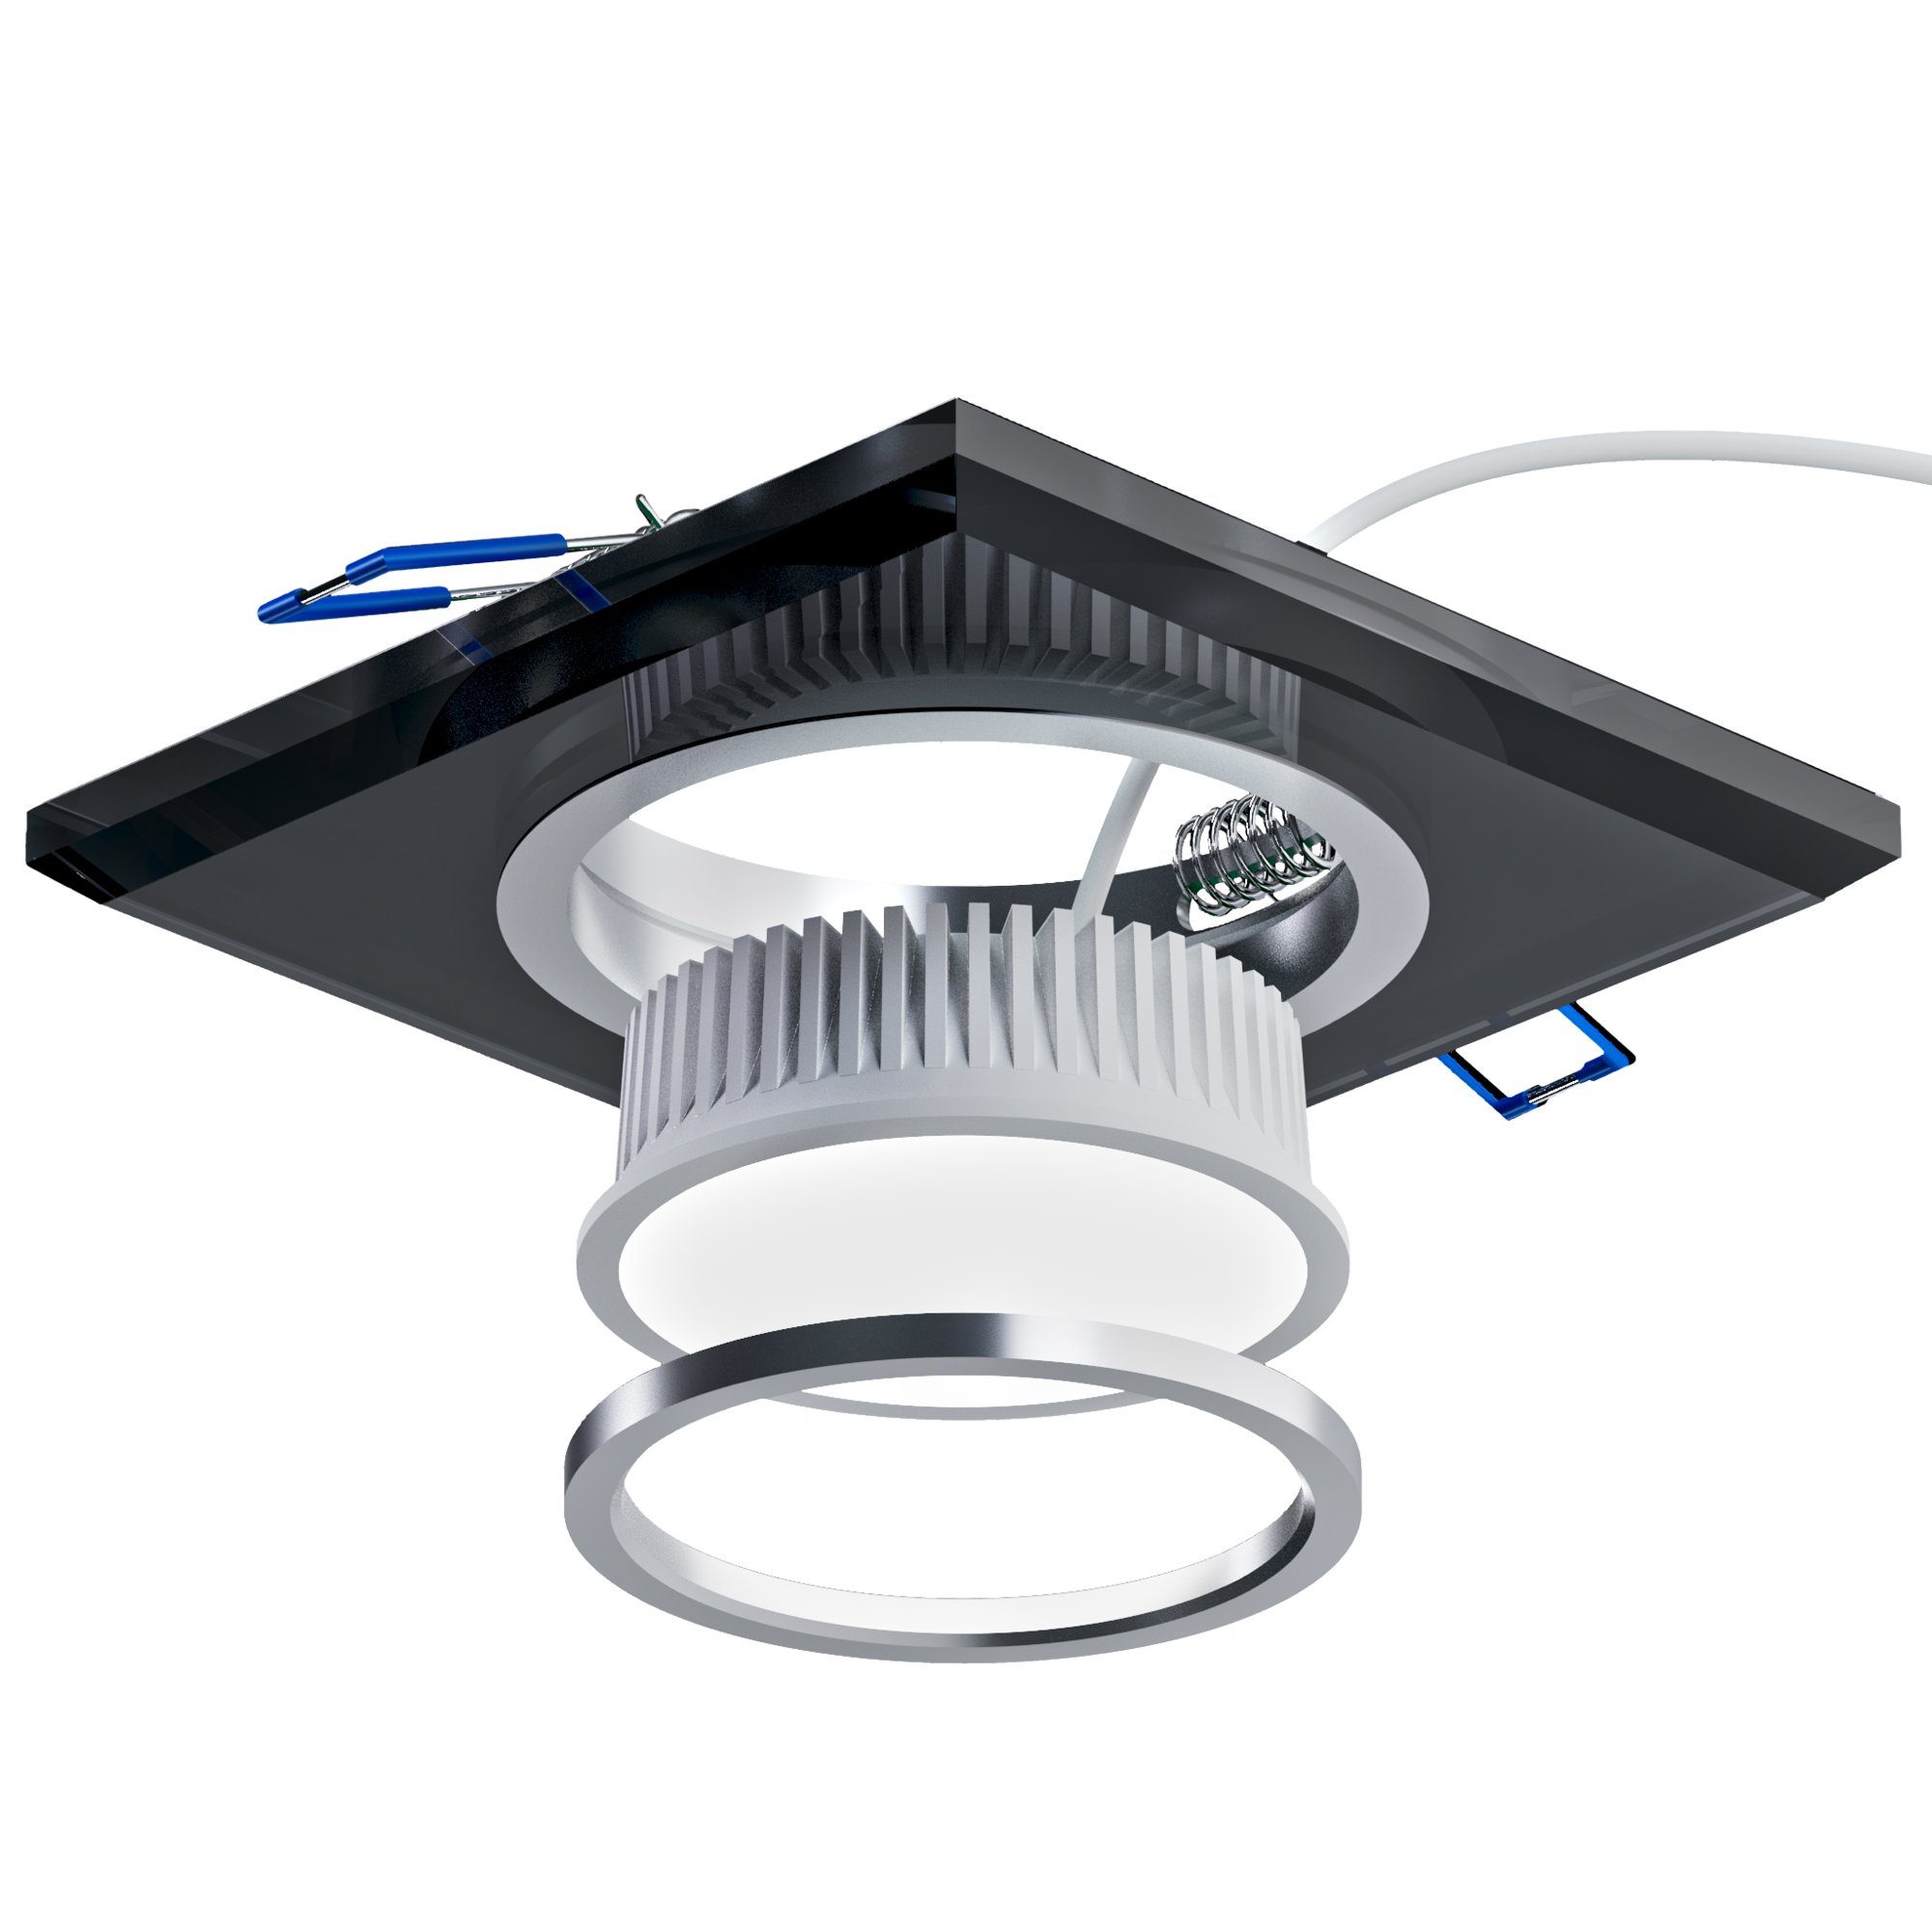 LED Flacher Glas eckig Warmweiß mit LED LED Einbaustrahler Modul, dimmbar SSC-LUXon schwarz Einbaustrahler